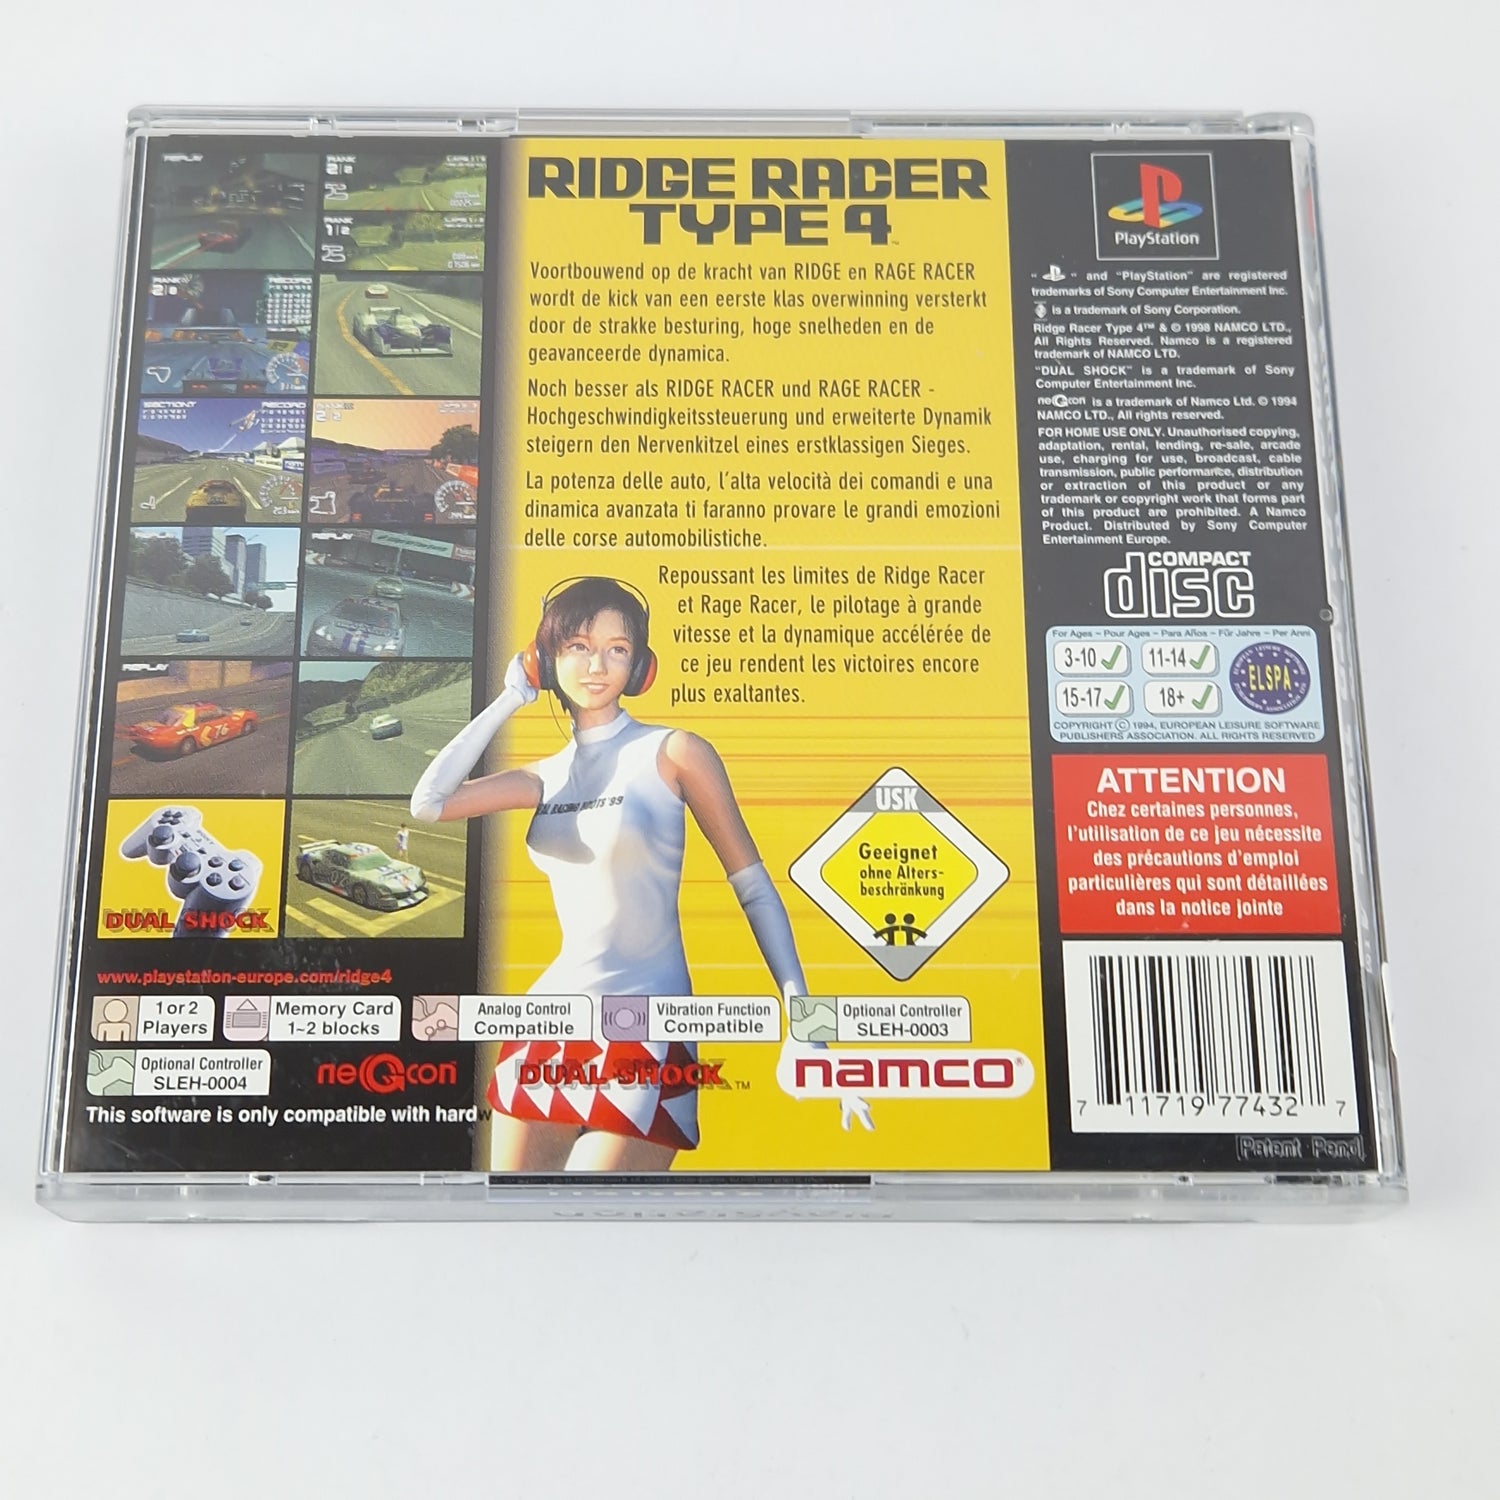 Playstation 1 Spiel : Ridge Racer Type 4 + DEMO - CD Anleitung OVP | SONY PS1